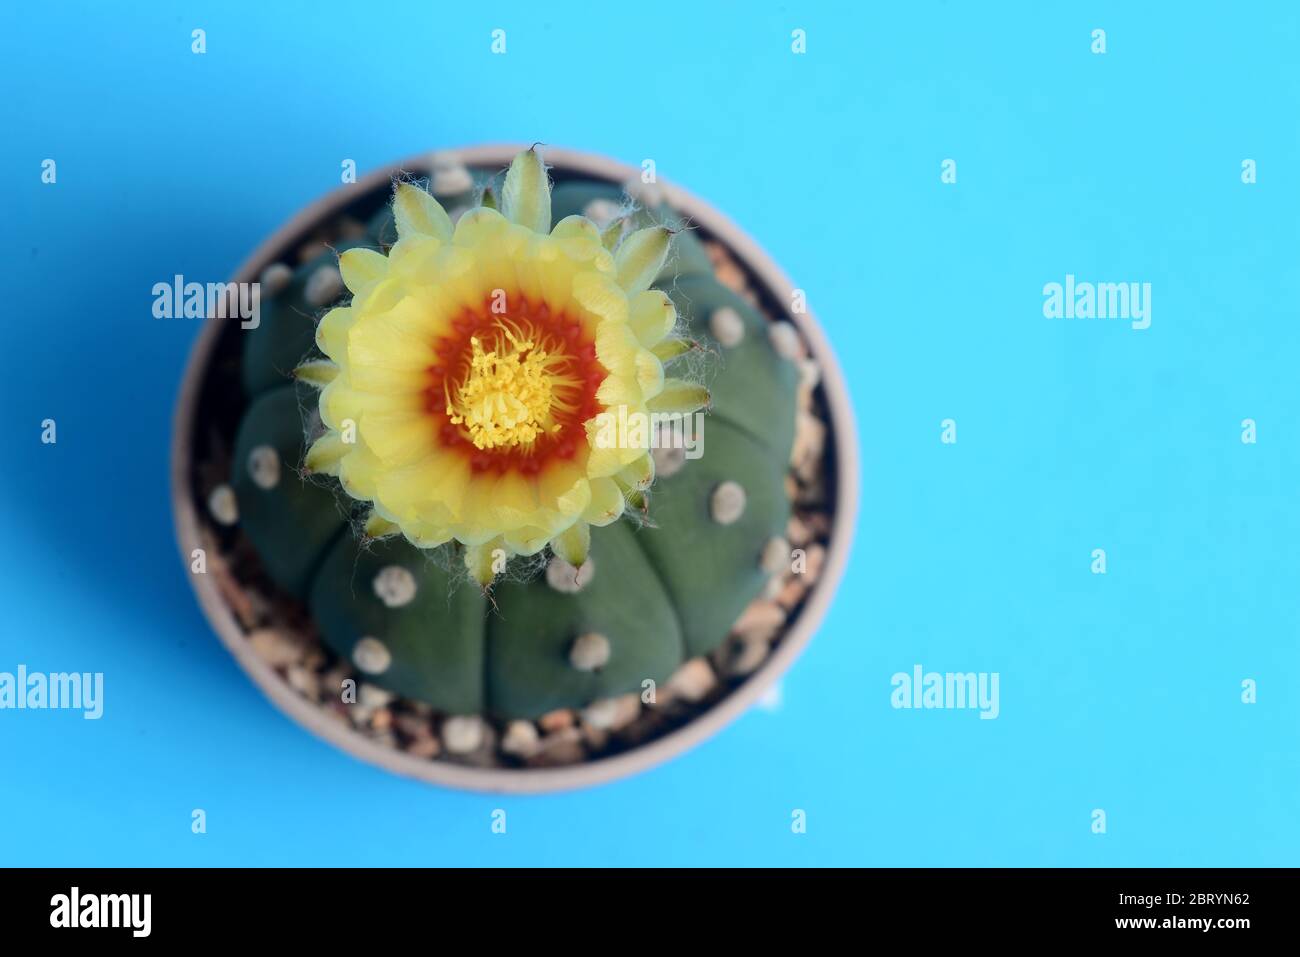 Astrophythum asterias nudum or sand dollar cactus, sea urchin cactus, star cactus and star peyote. Stock Photo